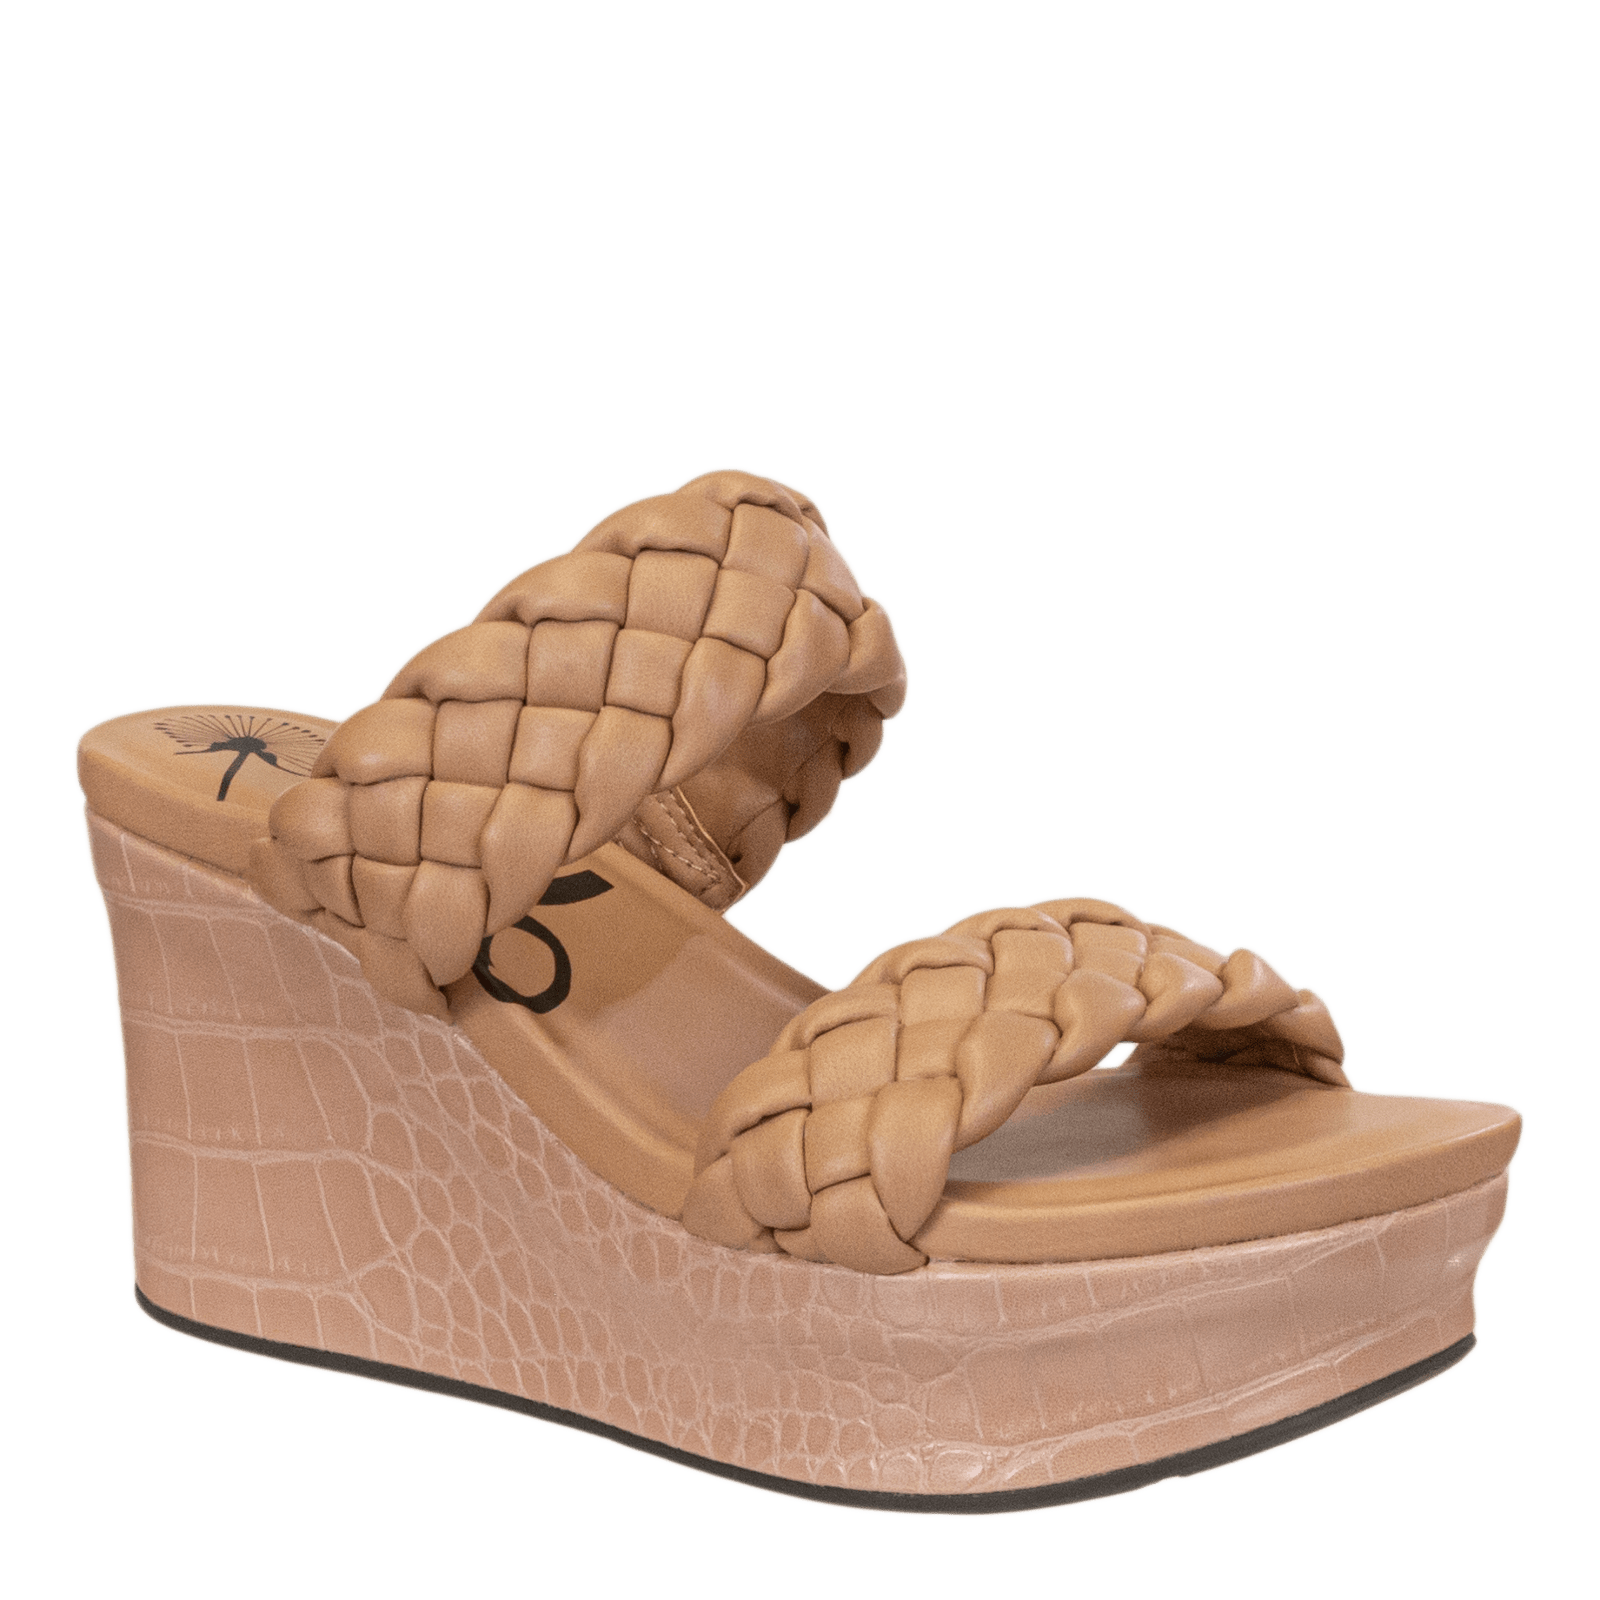 Comfortable Platform Wedge Sandals  Summer Wedge Heel Sandals - OTBT shoes